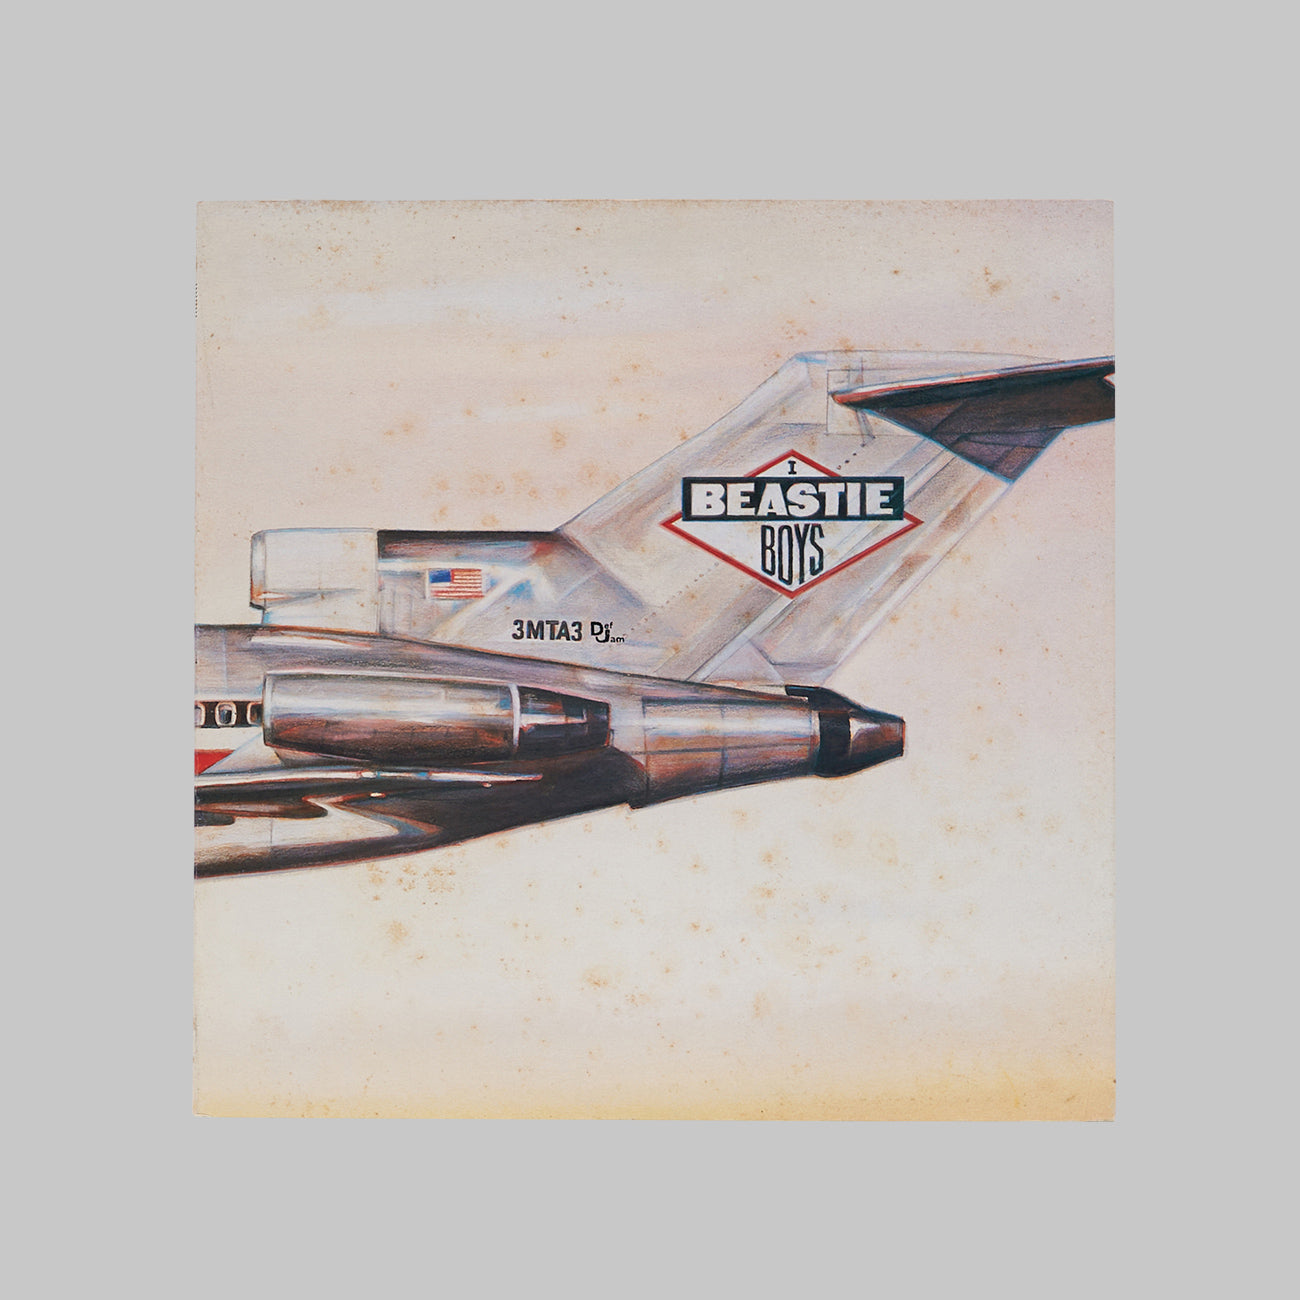 Beastie Boys / Licensed To Ill